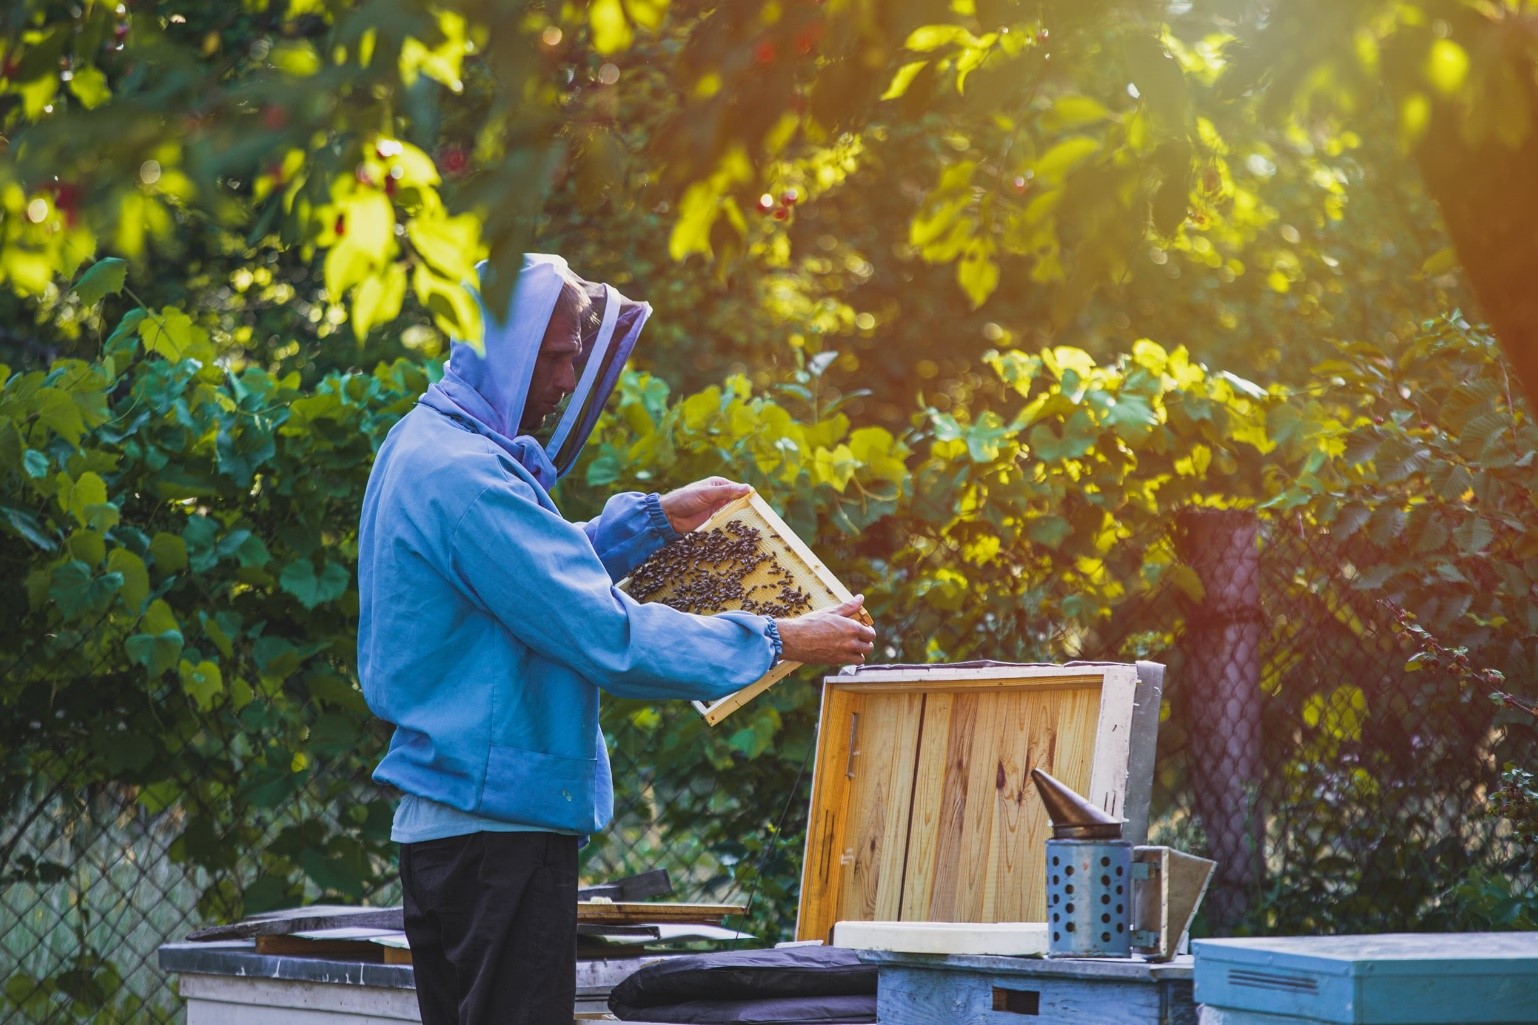 A hobbyist beekeeper examines a hive frame